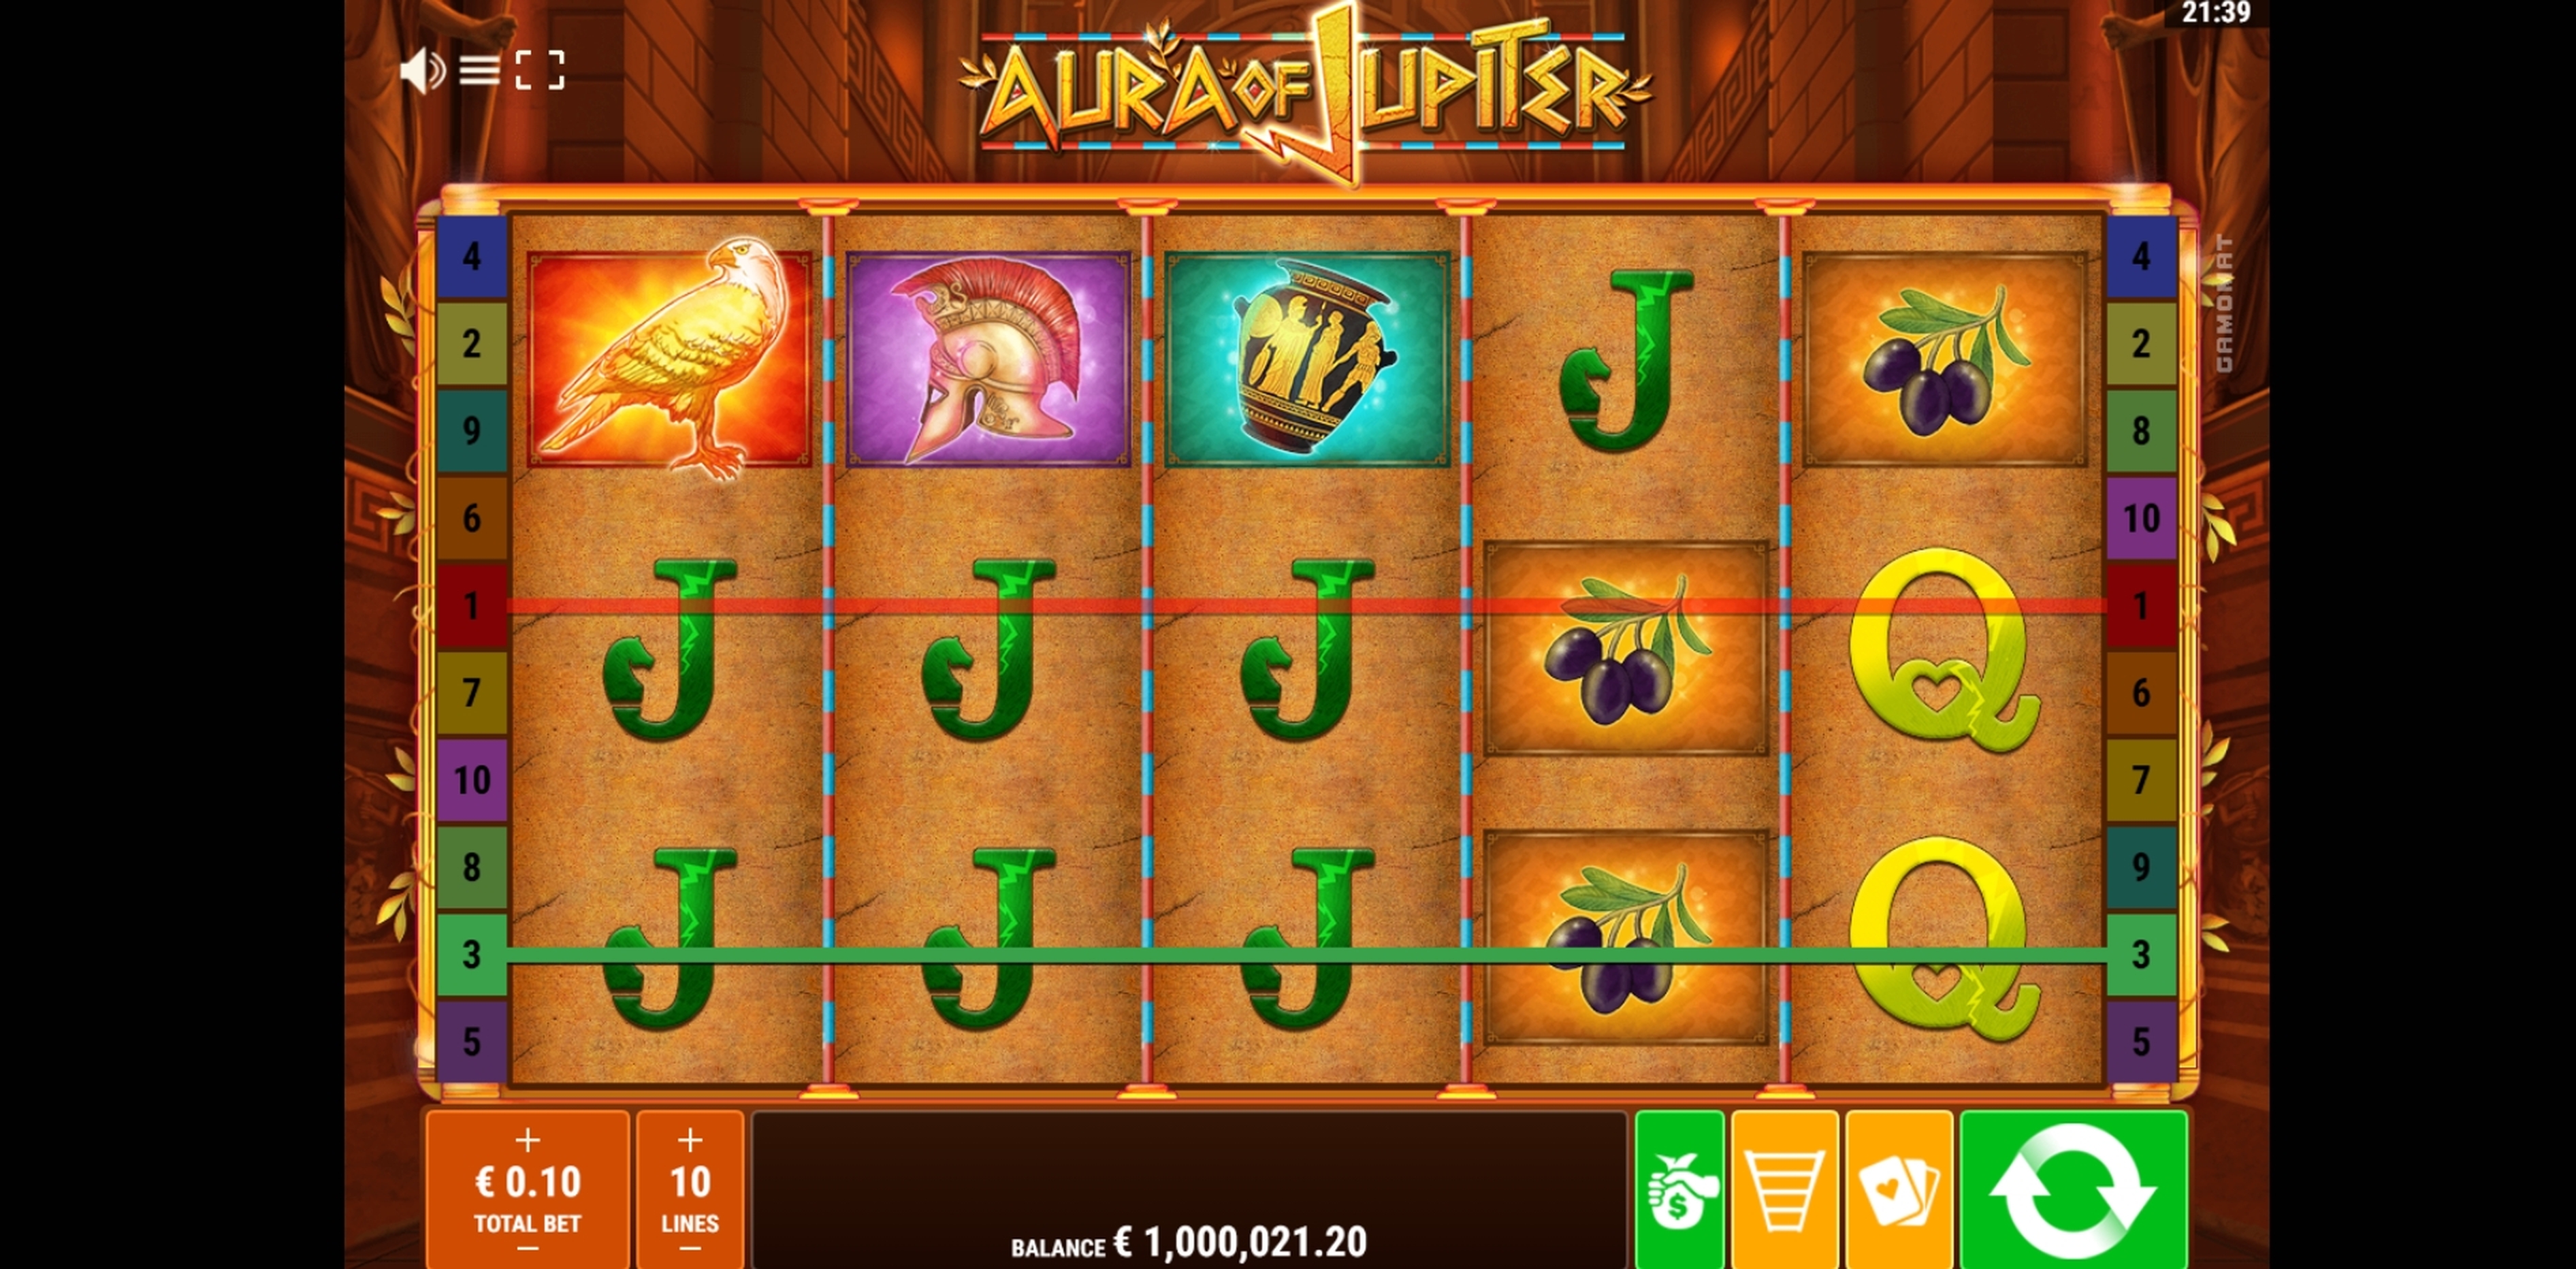 Win Money in Aura of Zeus Free Slot Game by Gamomat